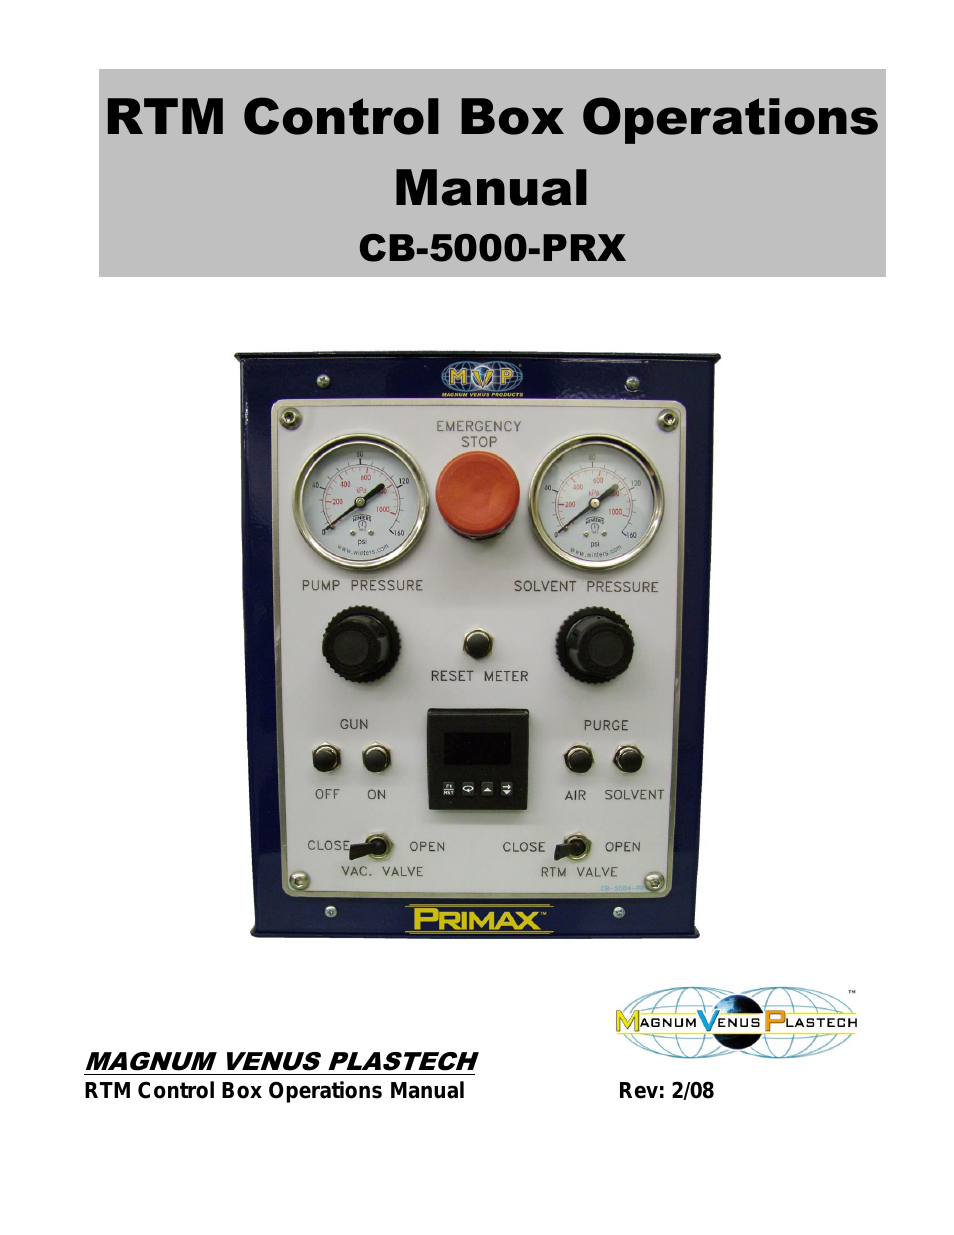 CB-5000-PRX RTM Control Box